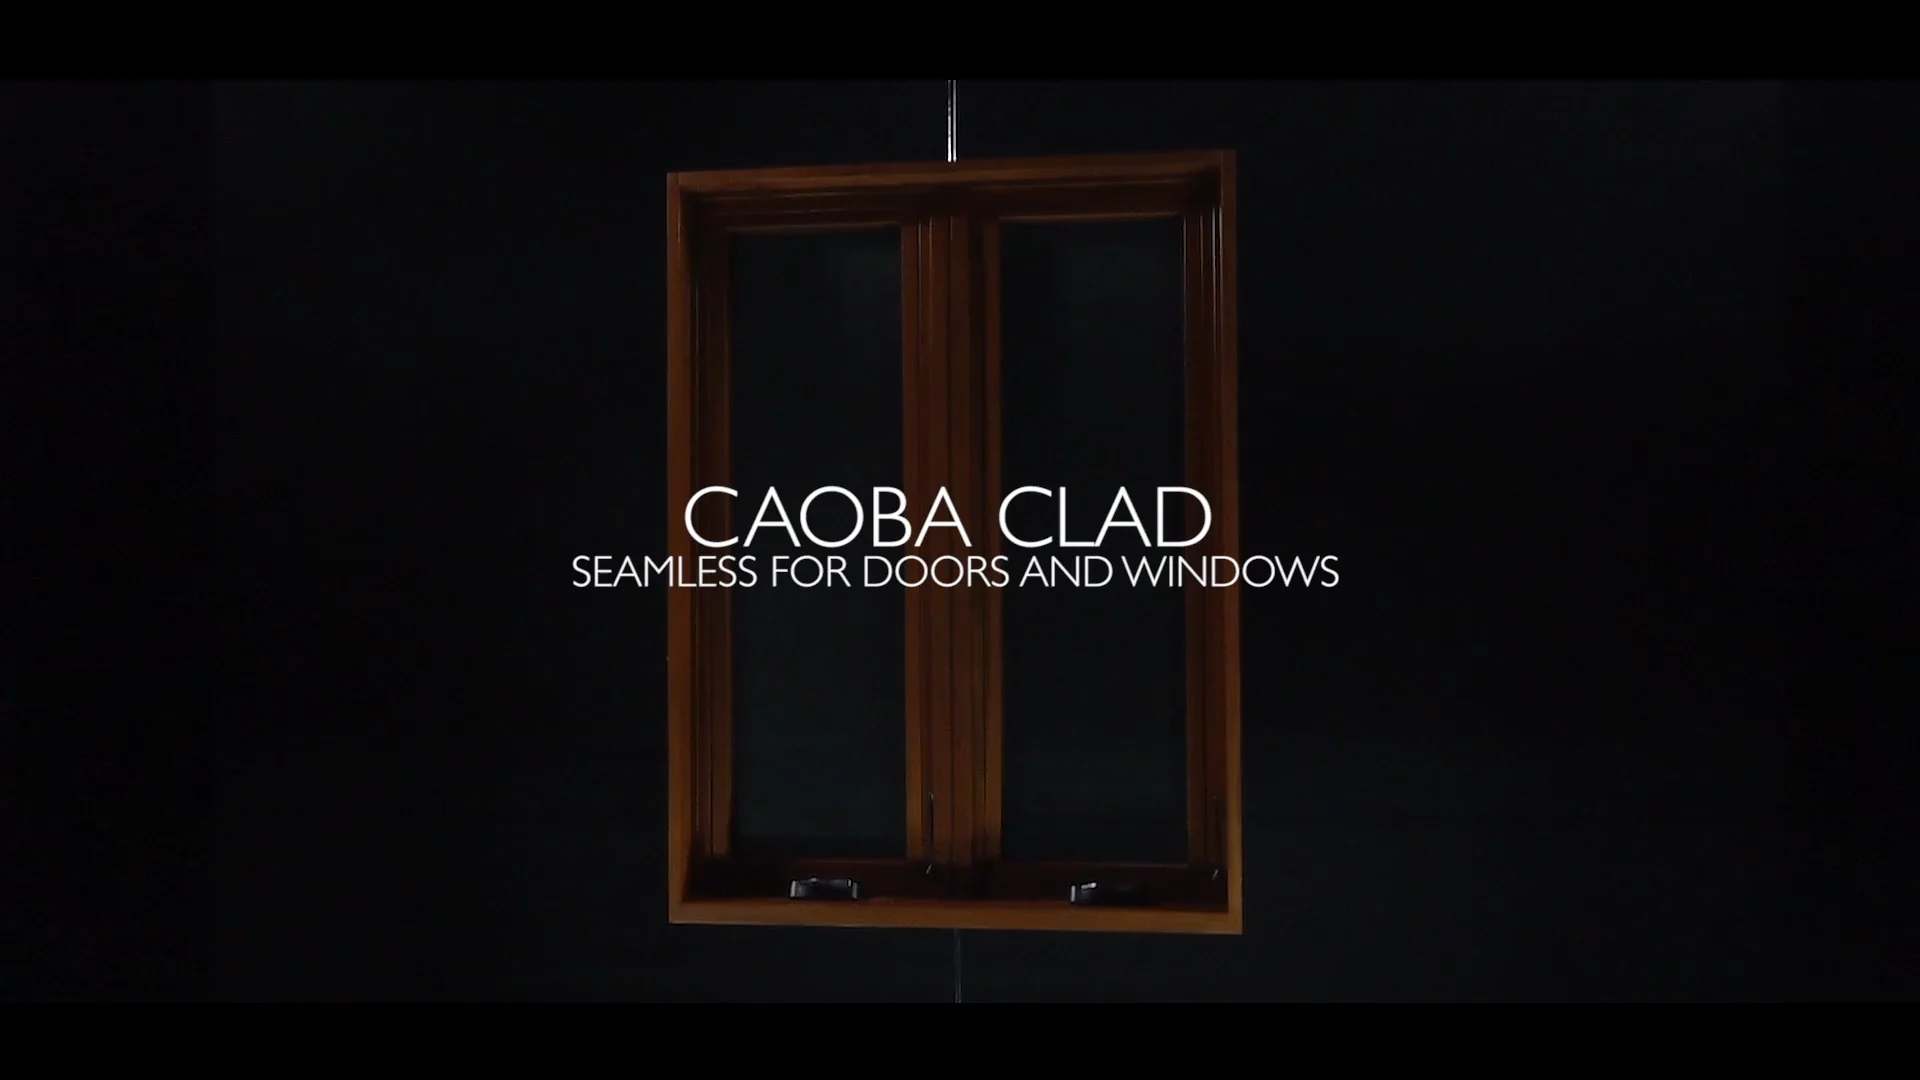 Caoba Doors & Windows